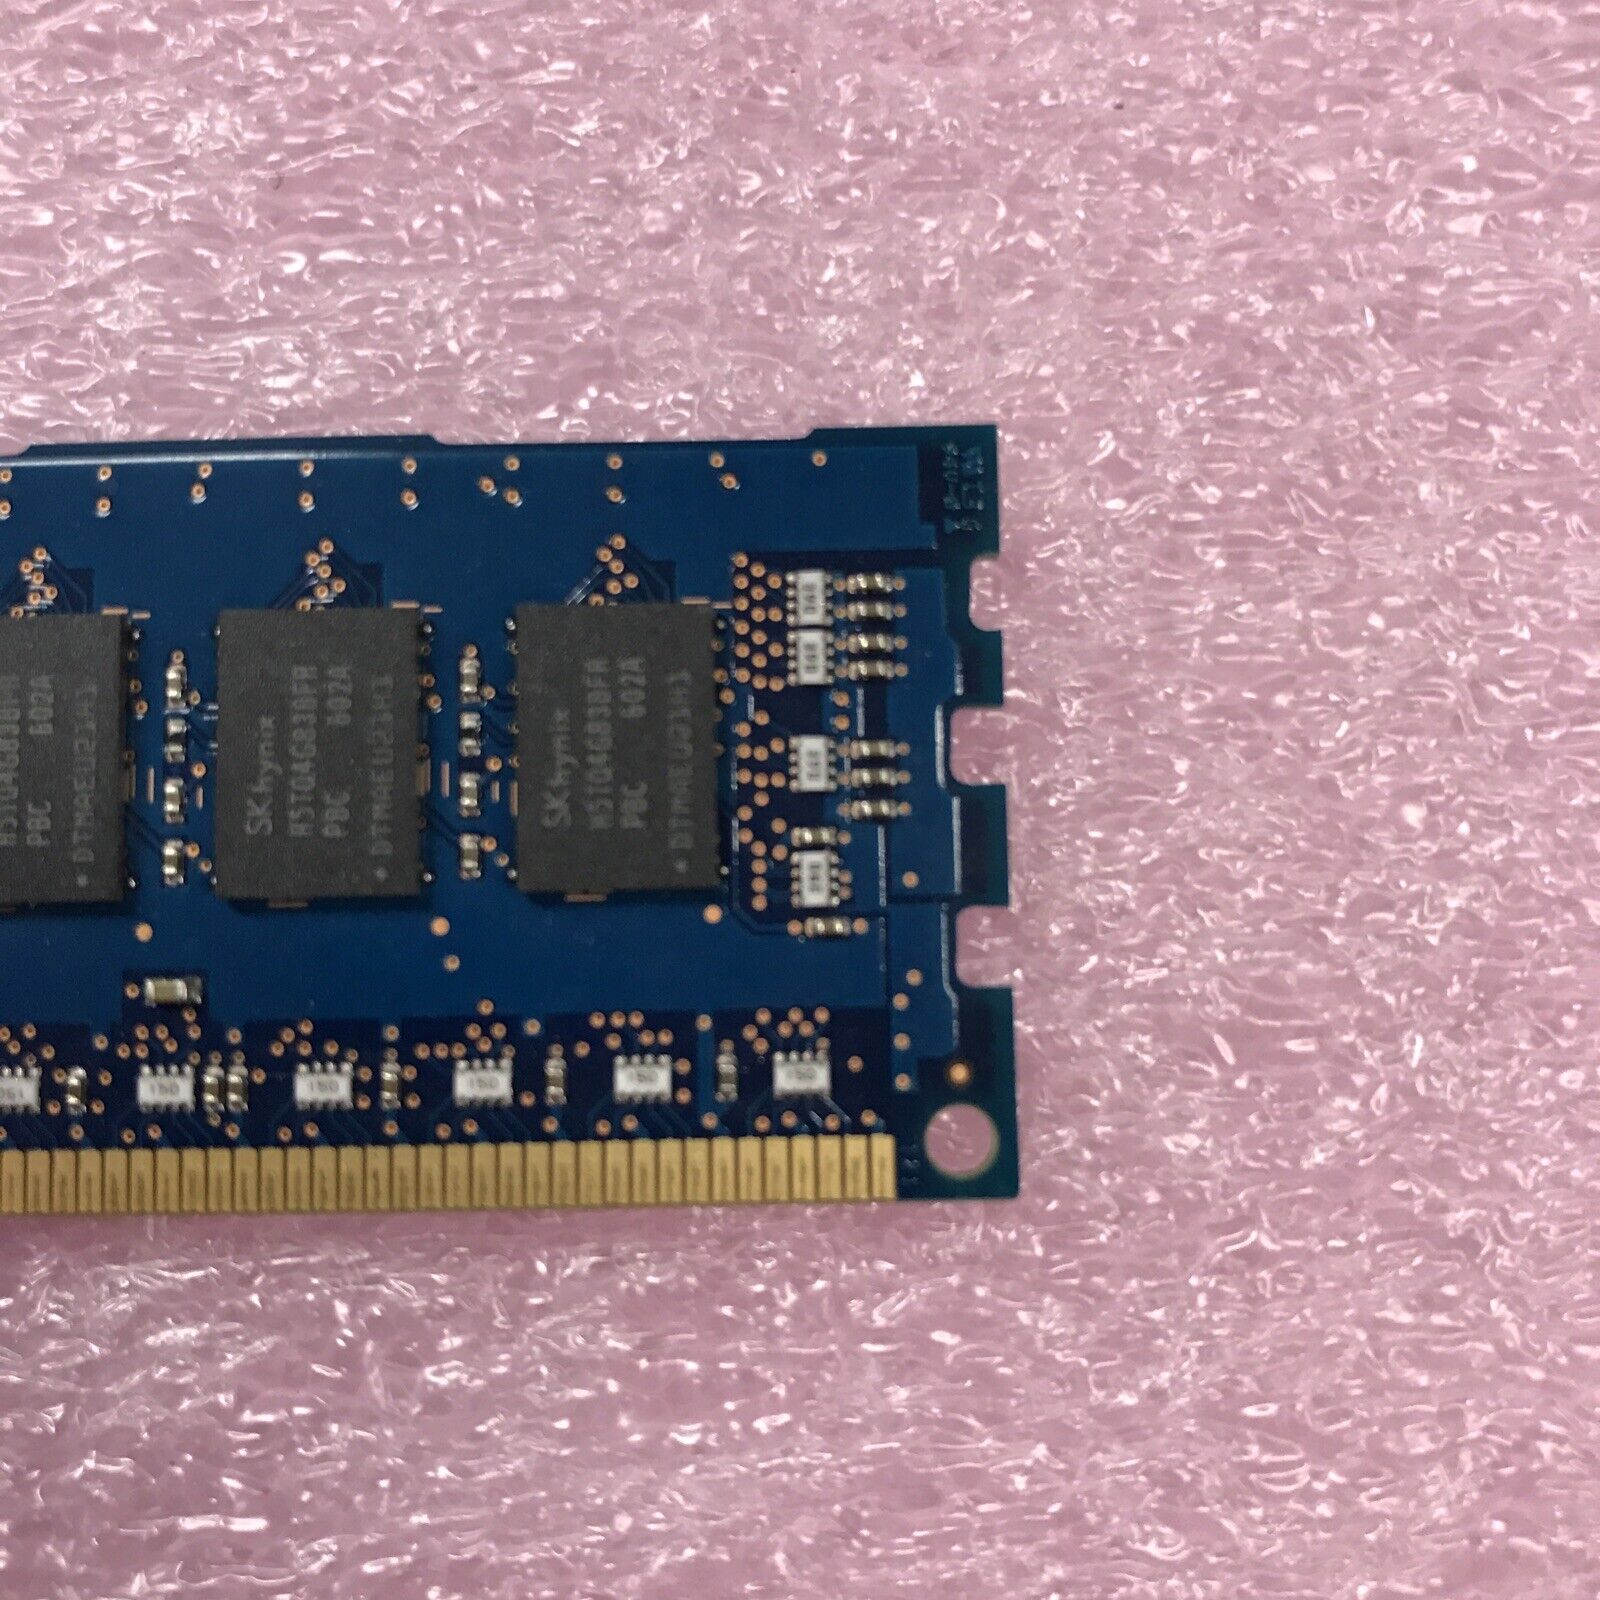 Hynix 16GB Kit 2x8GB PC3-12800R-11-13-B1 Laptop Memory HMT41GR7BFR8C